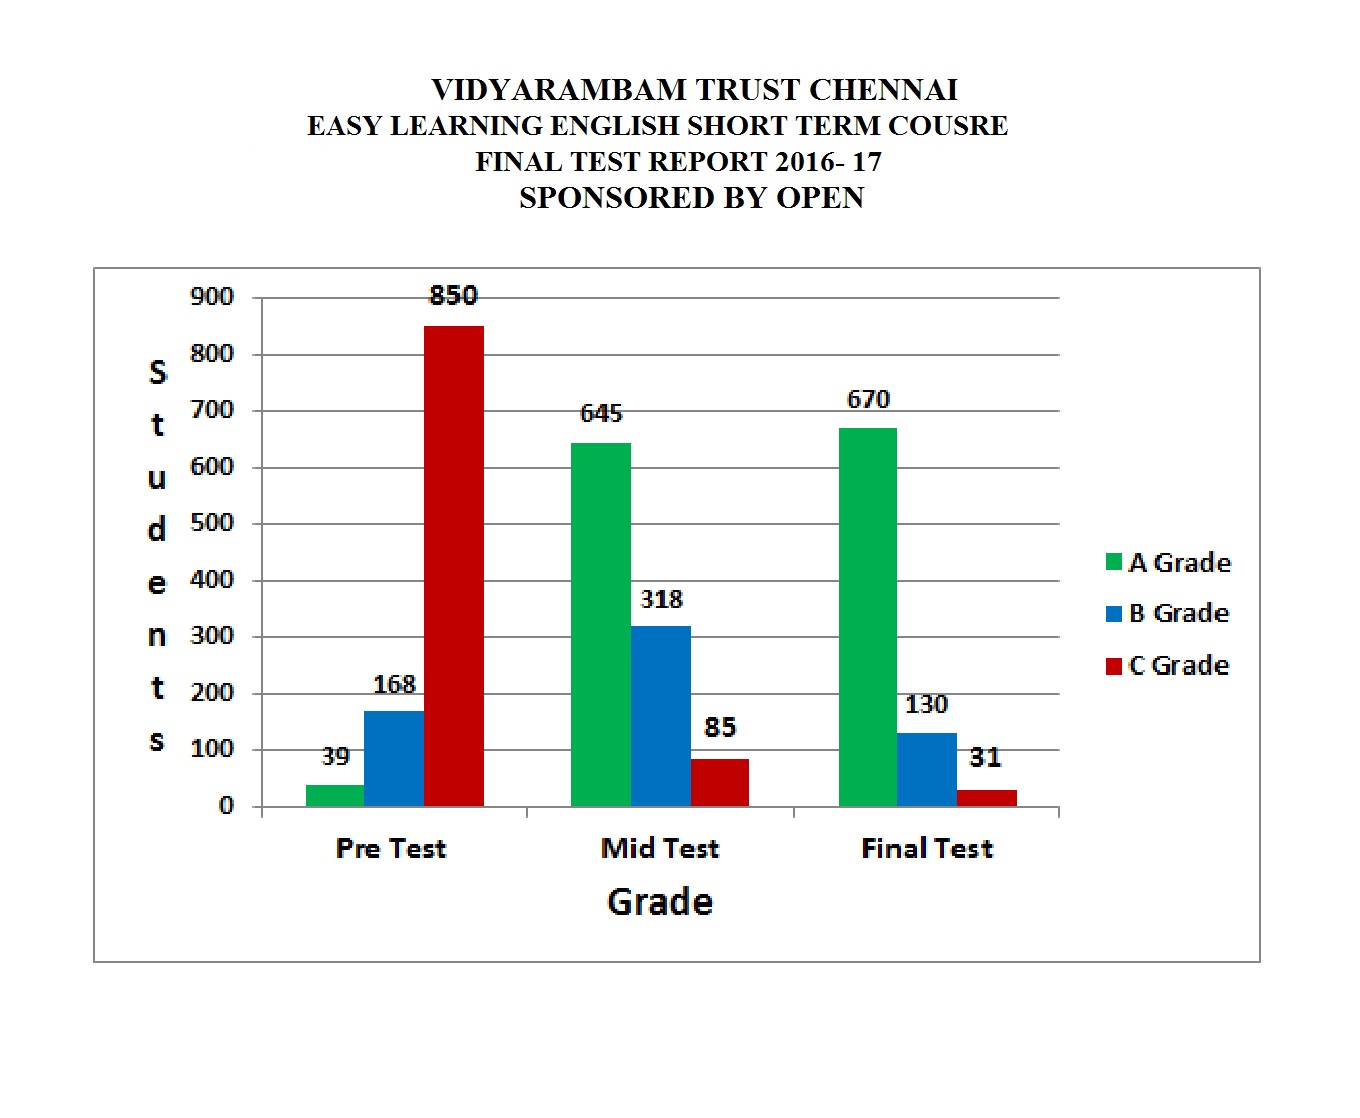 Vidyarambam end-year 2016-17 ELE results